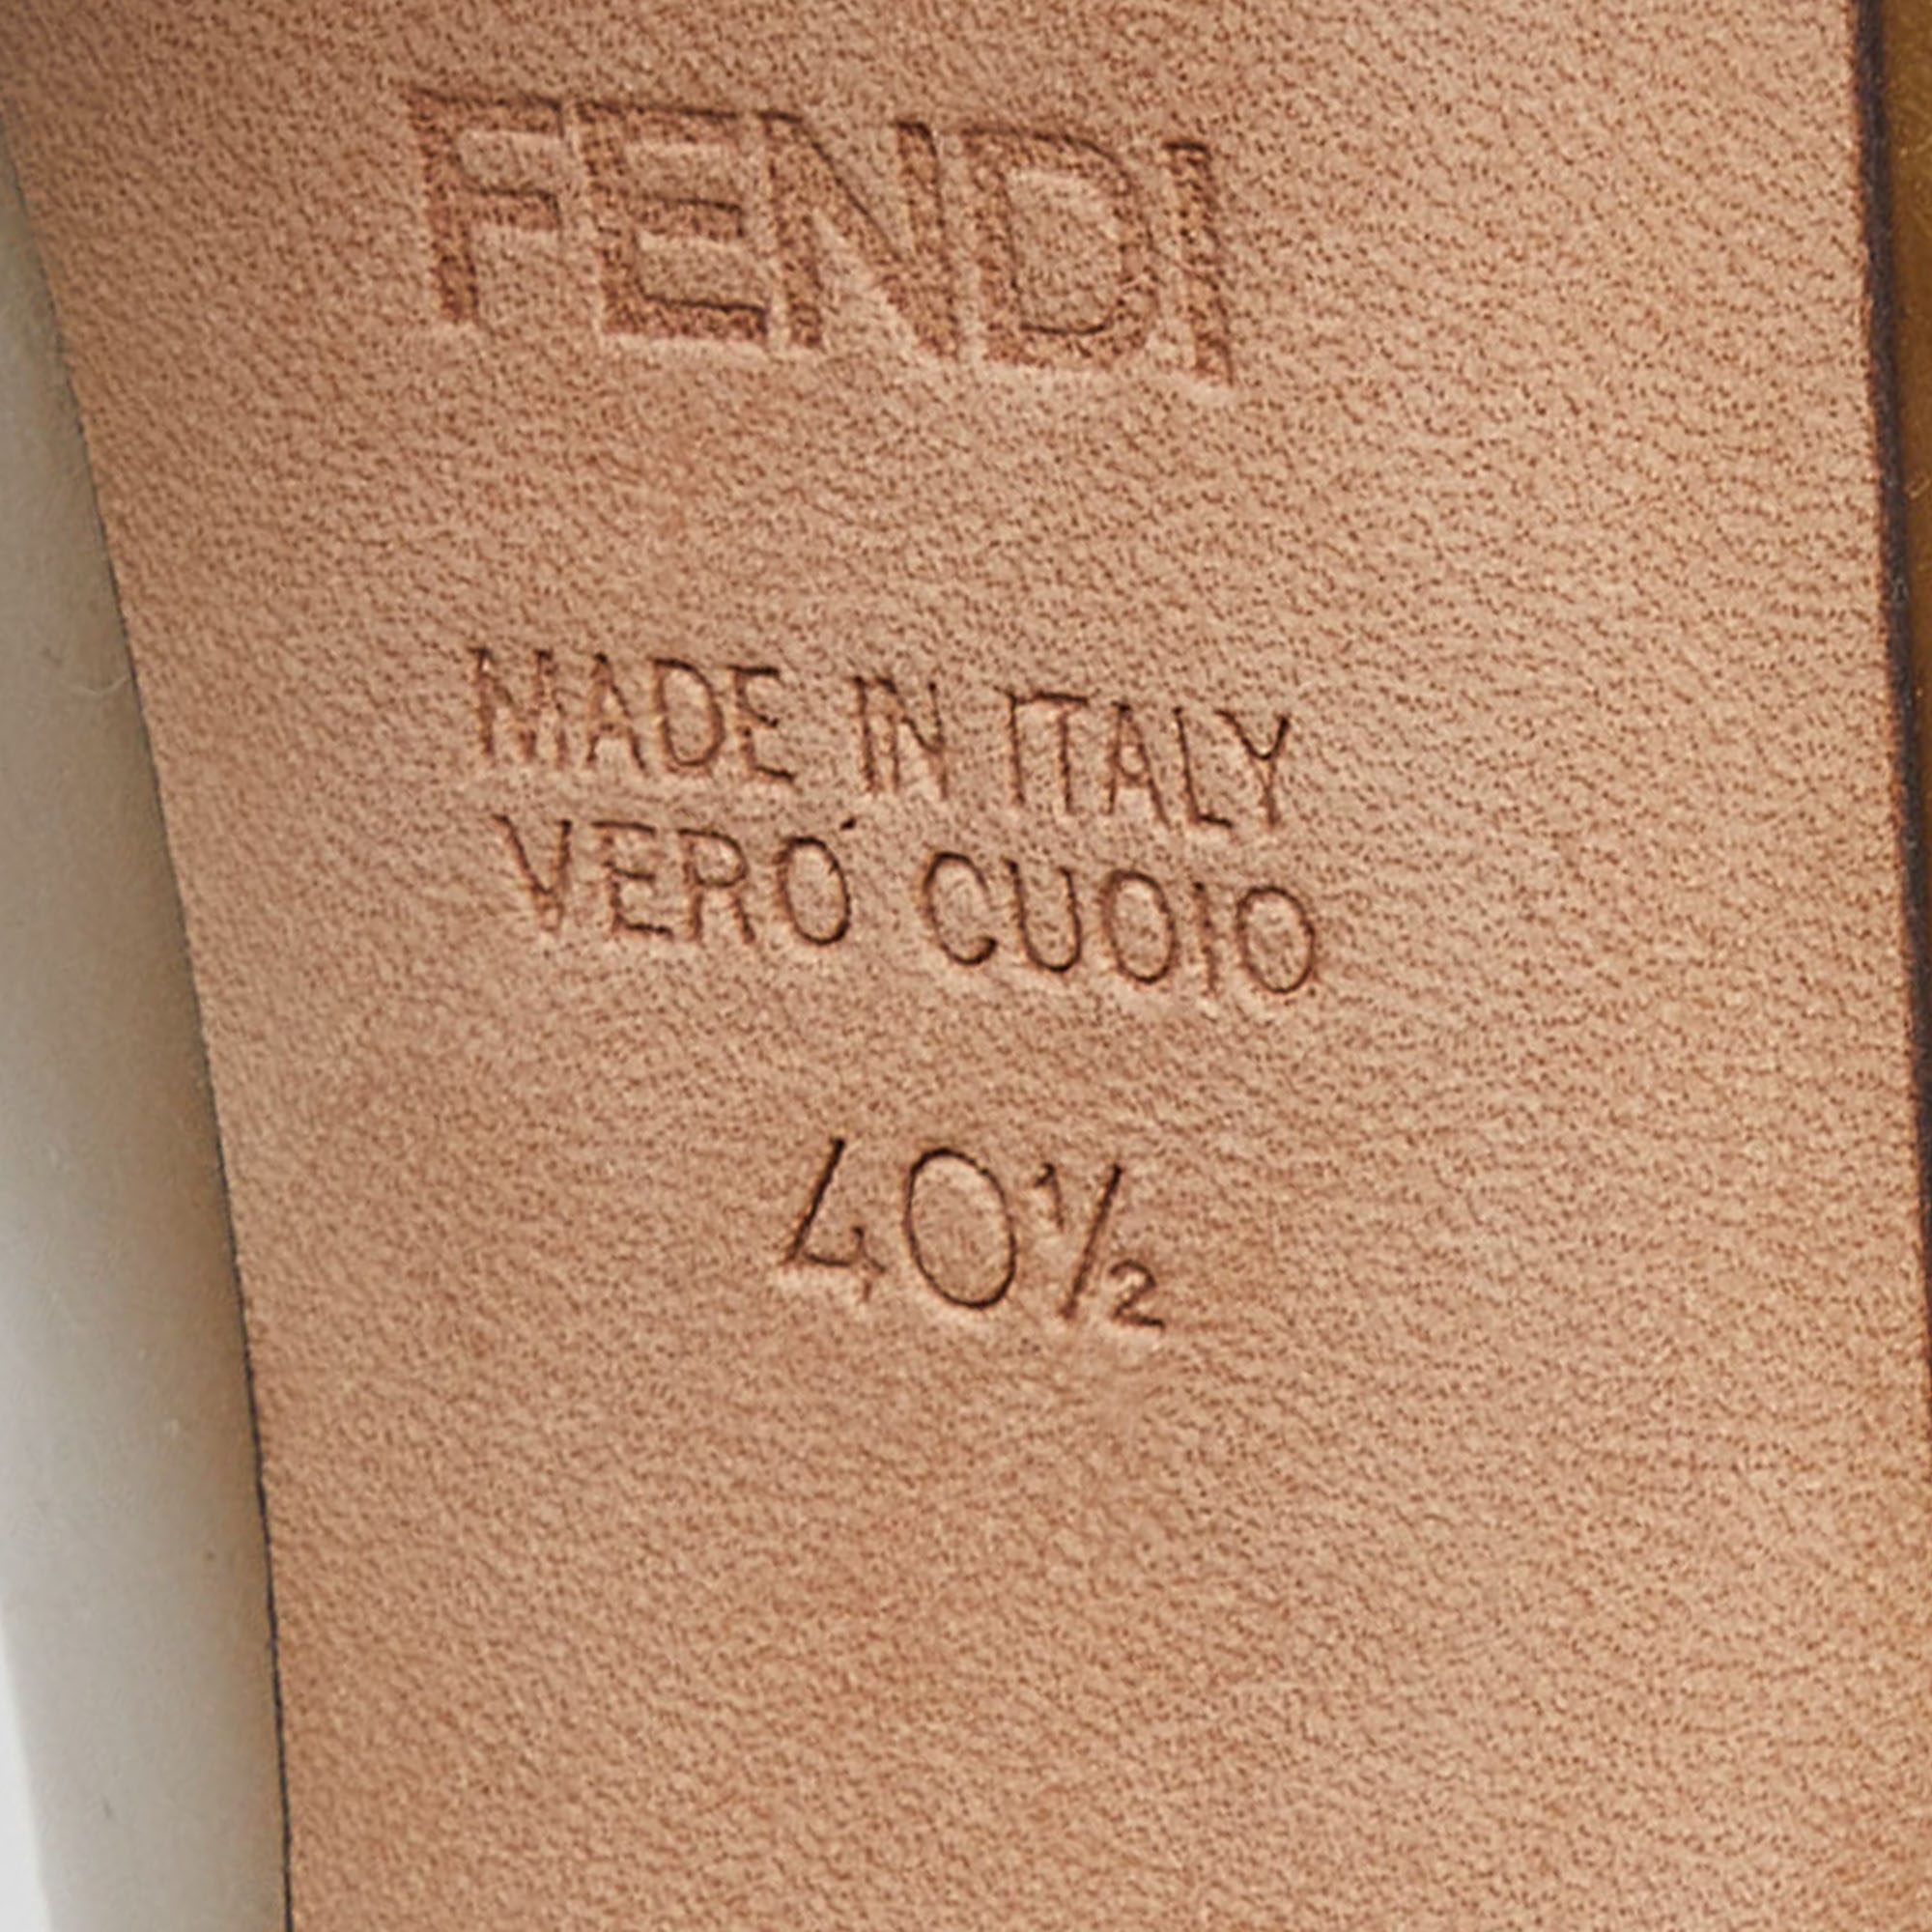 Fendi Gold Patent Leather Zucca Heel Peep Toe Pumps Size 40.5